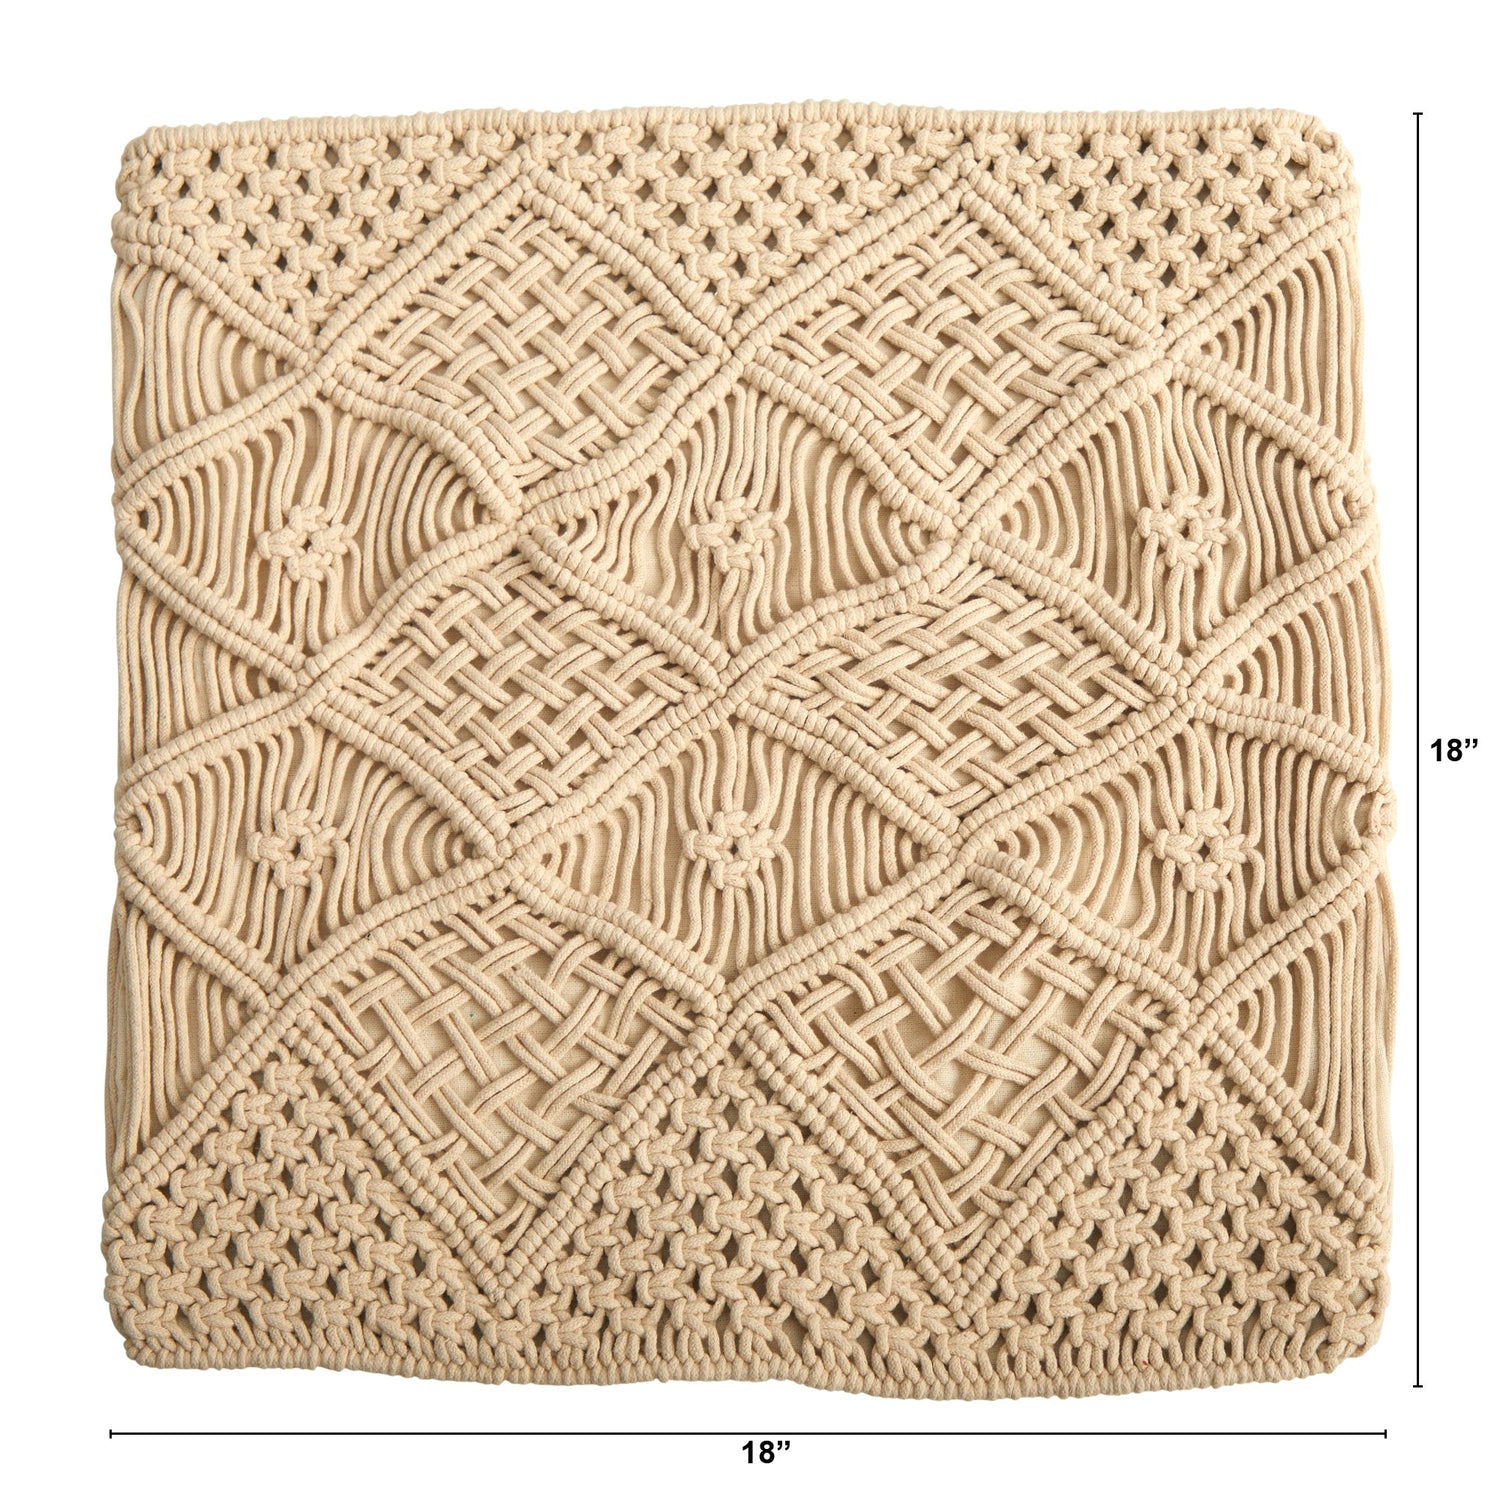 18” Boho Cross Woven Macrame Decorative Pillow Cover